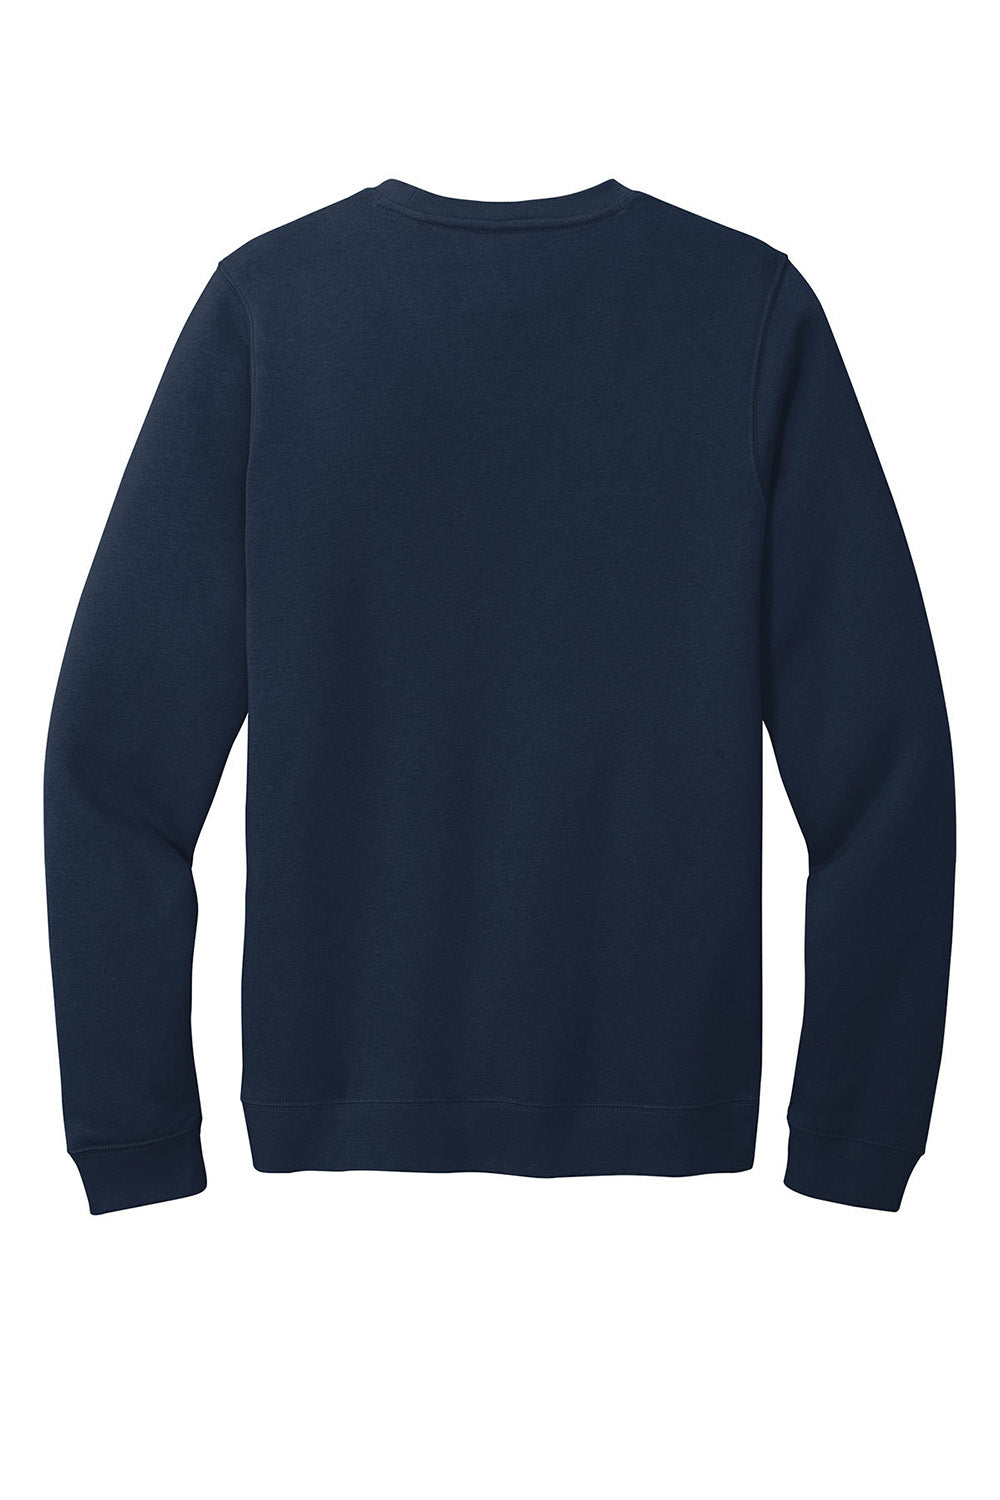 Nike CJ1614 Mens Club Fleece Crewneck Sweatshirt Navy Blue Flat Back